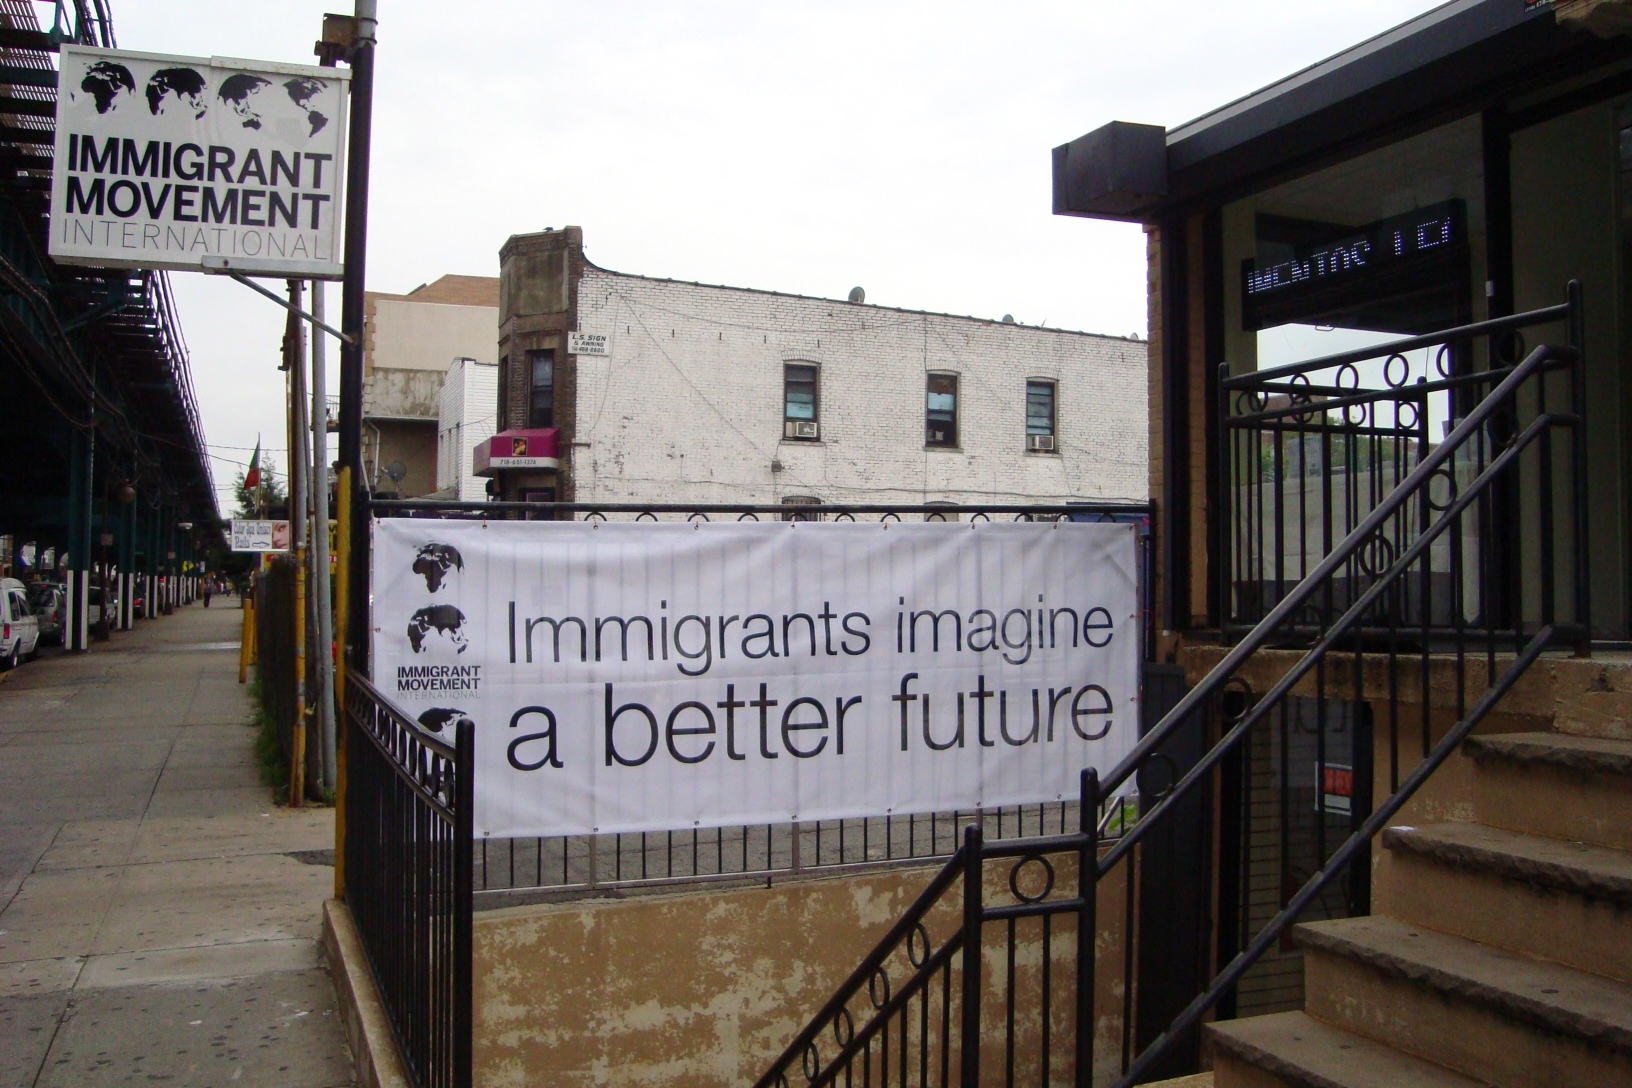 Tania Bruguera's Immigrant Movement International headquarters in Queens